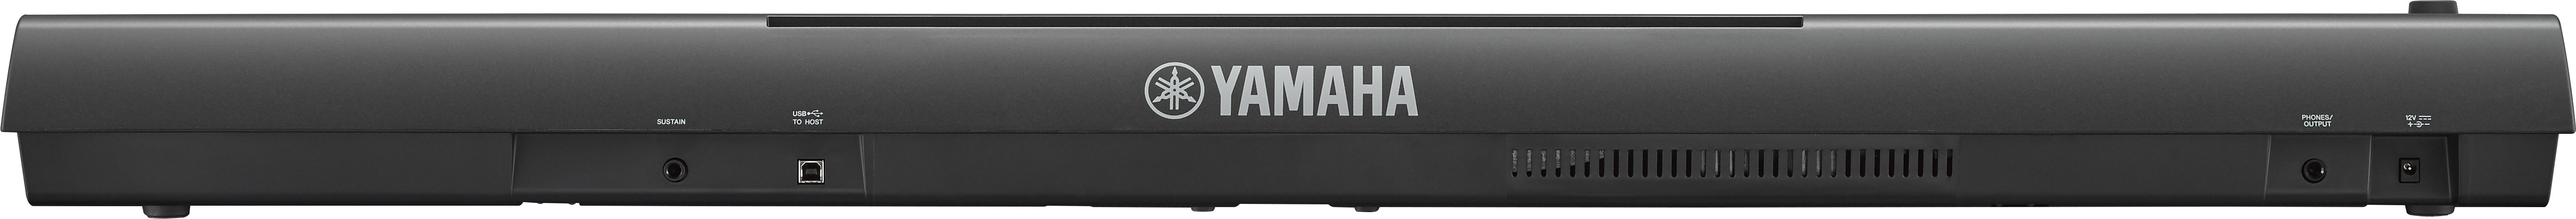 Yamaha Piaggero NP-32B Digital Keyboard